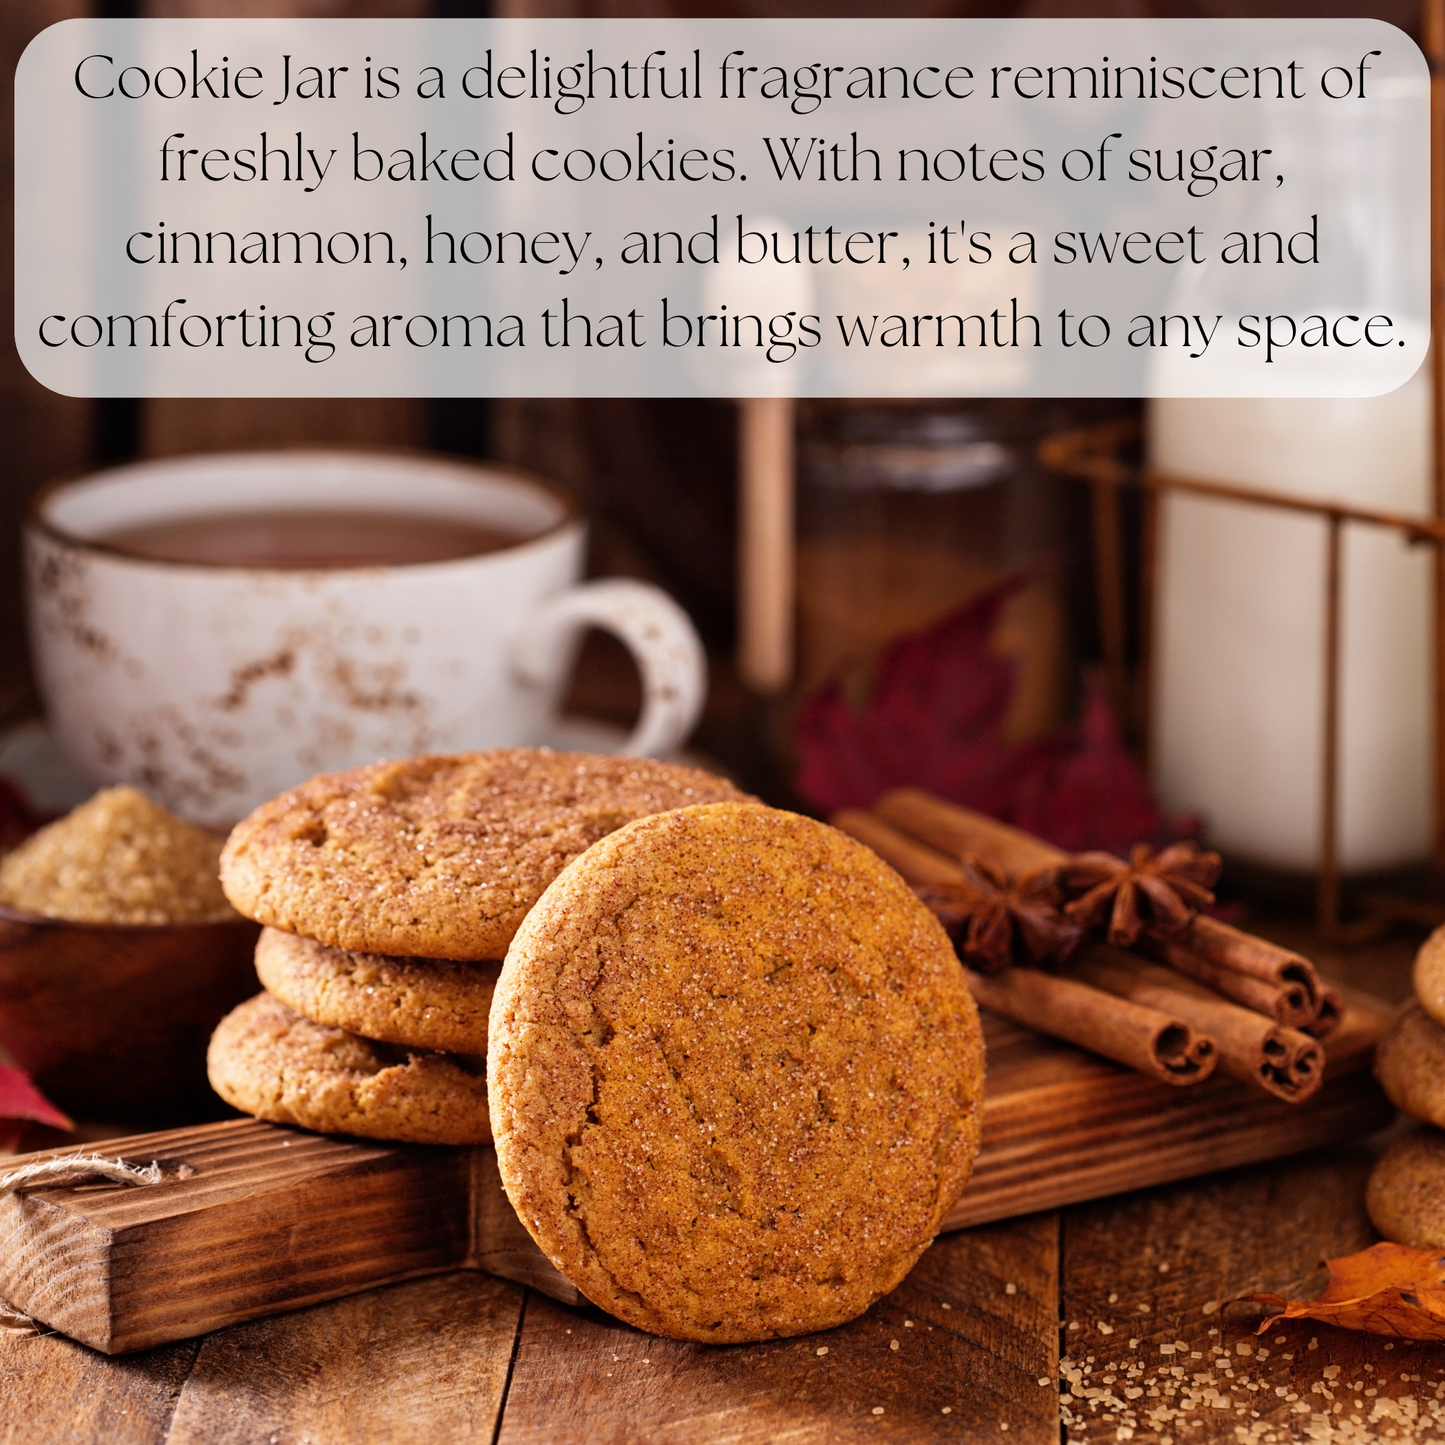 Cookie Jar - Wax Melts